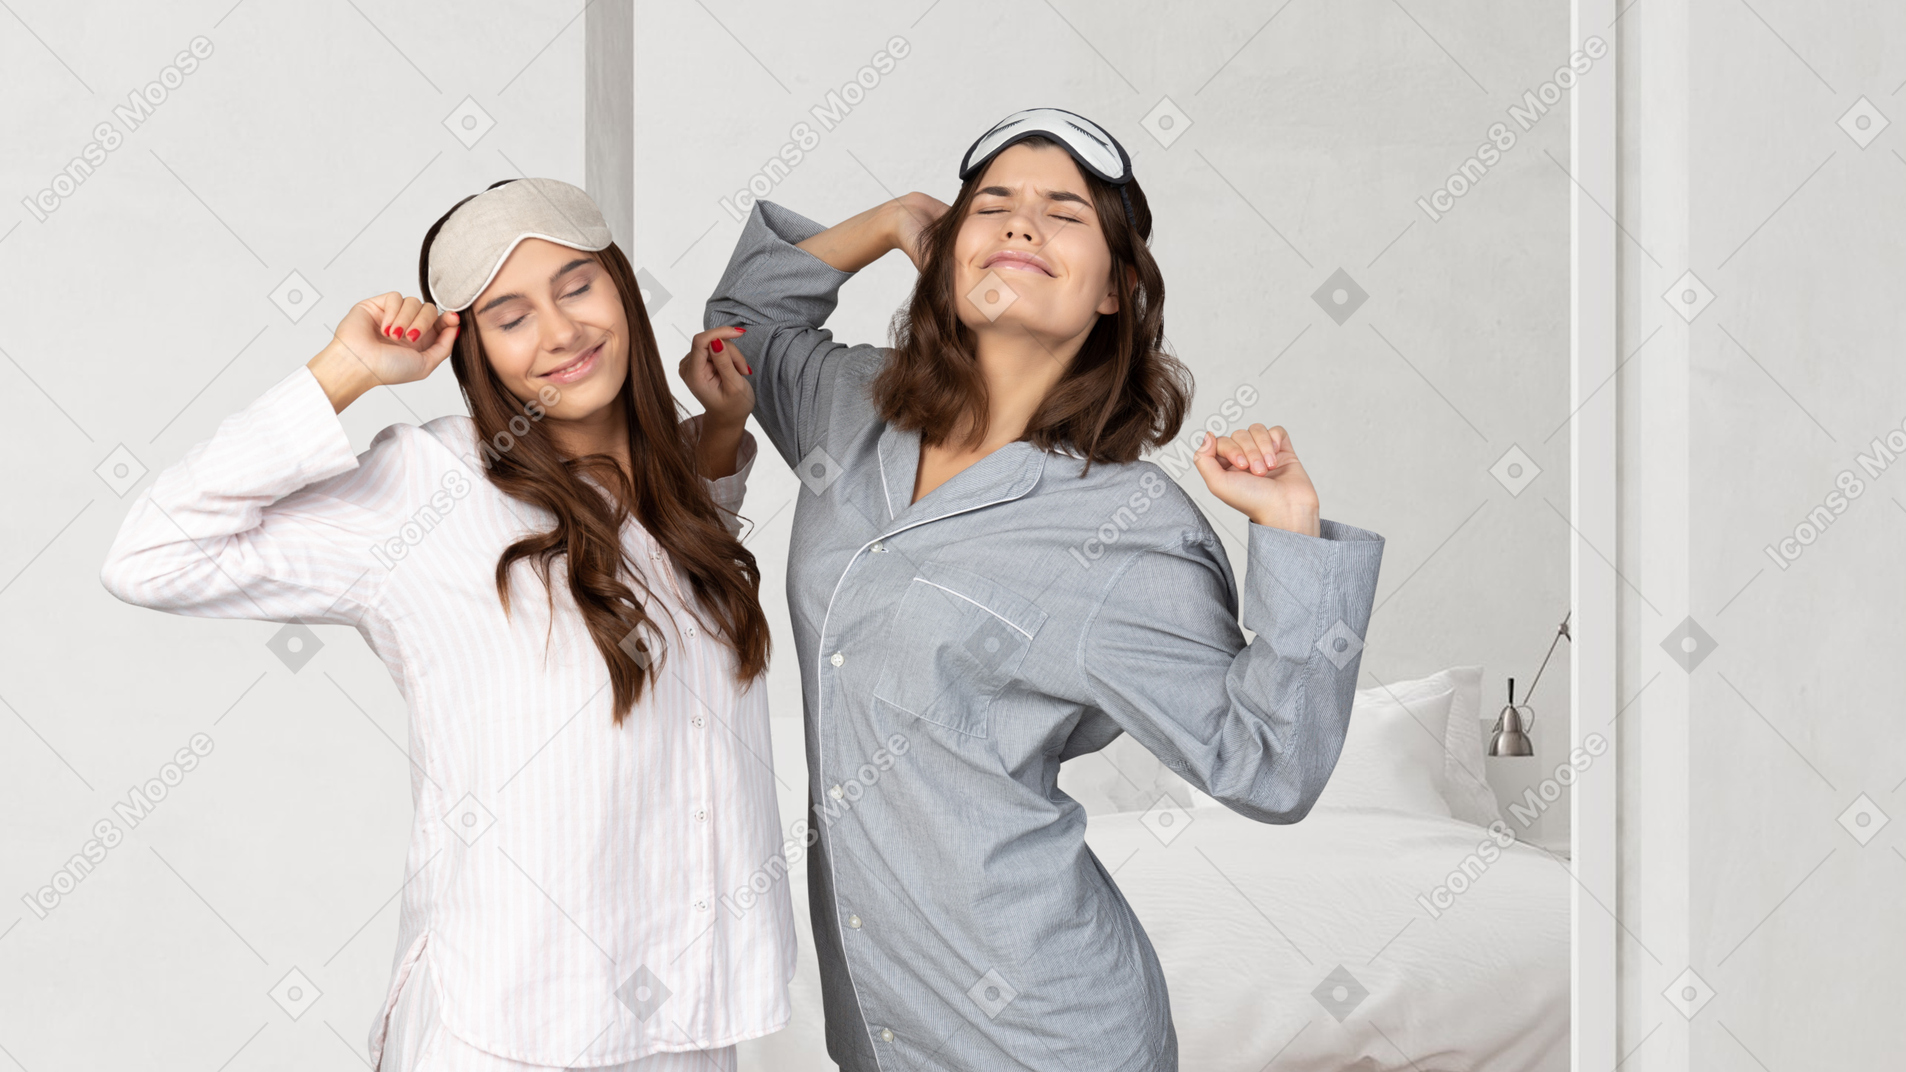 Two women in pyjamas waking up